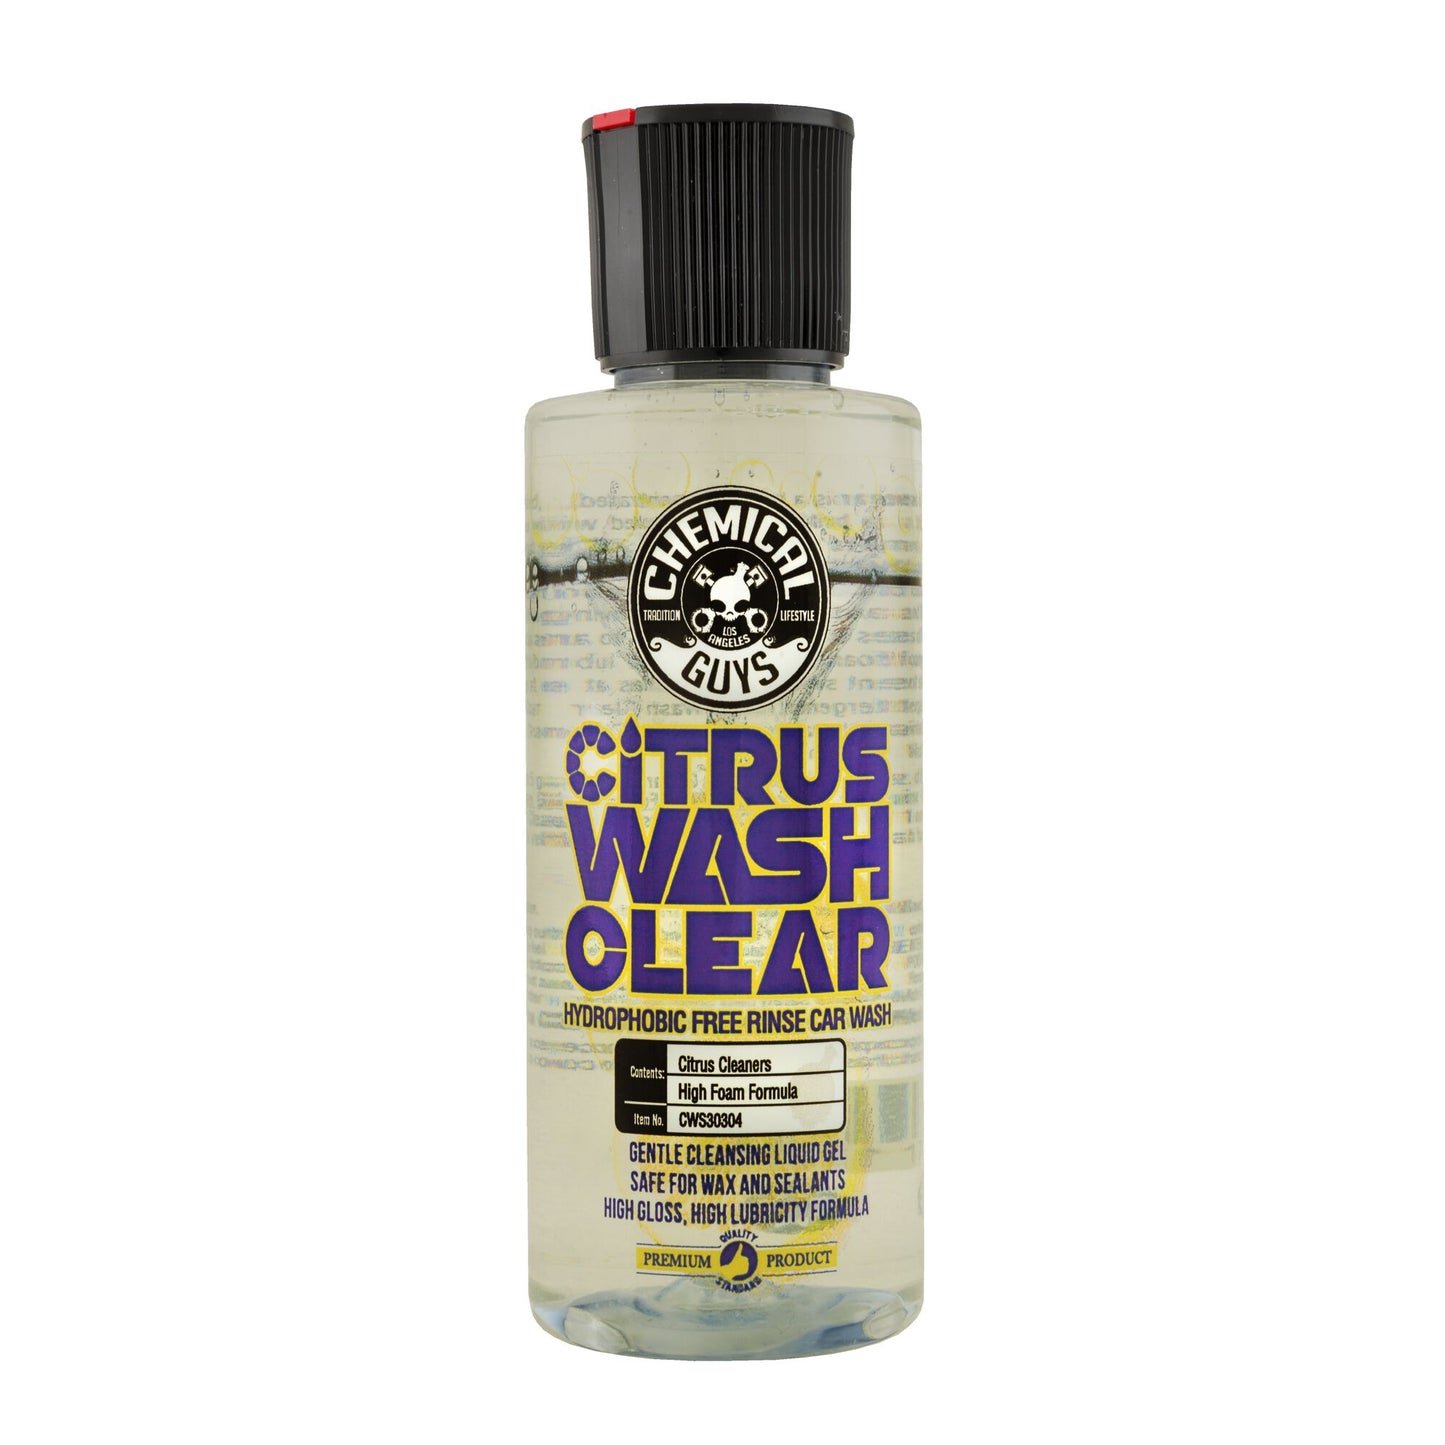 Chemical Guys Citrus Wash & Gloss - 128 oz - Detailed Image